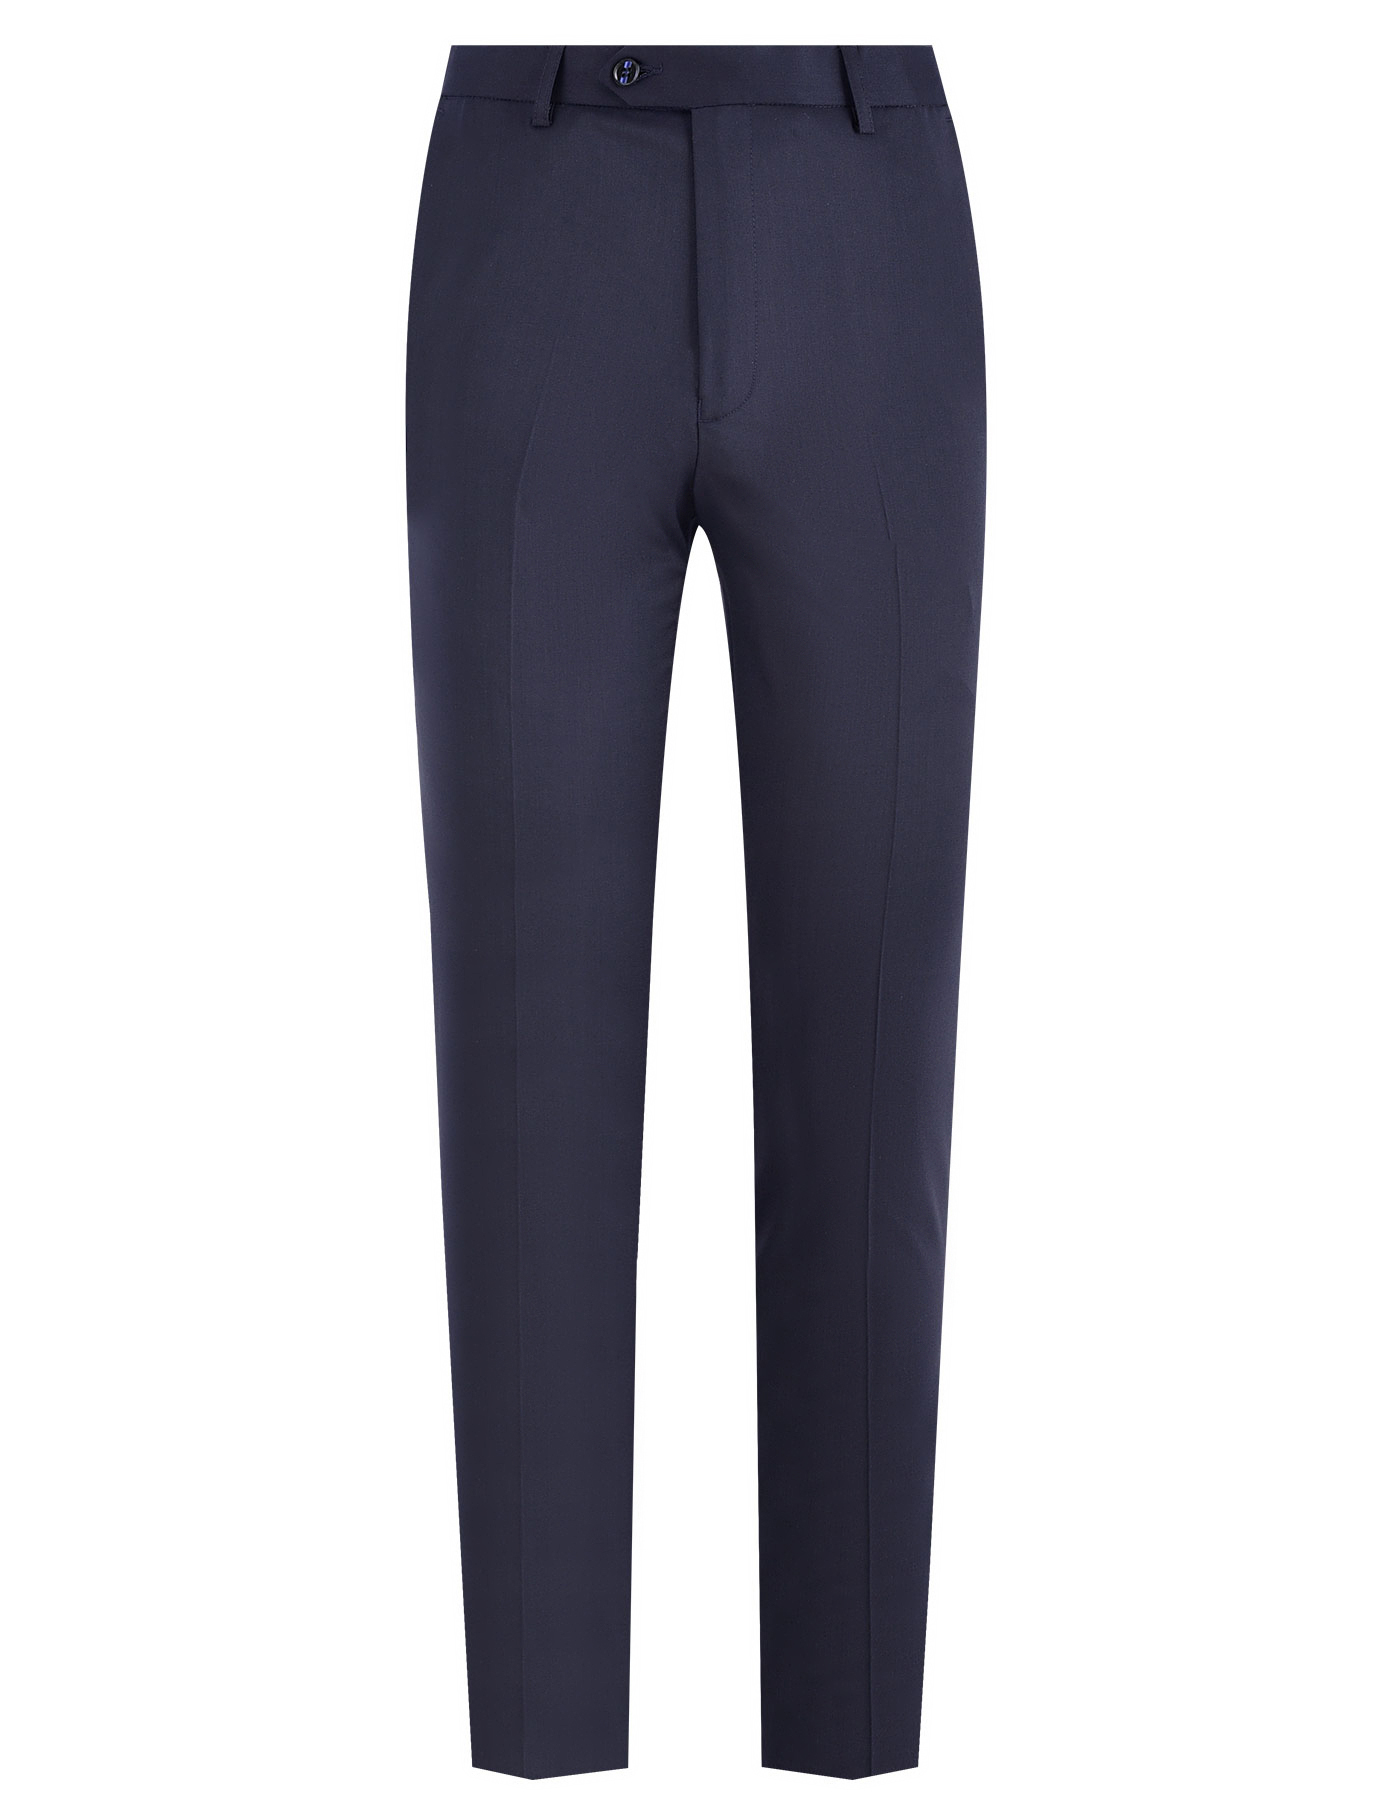 Mens Formal Trousers Online | Dress Pants For Men at Uniworth Shop